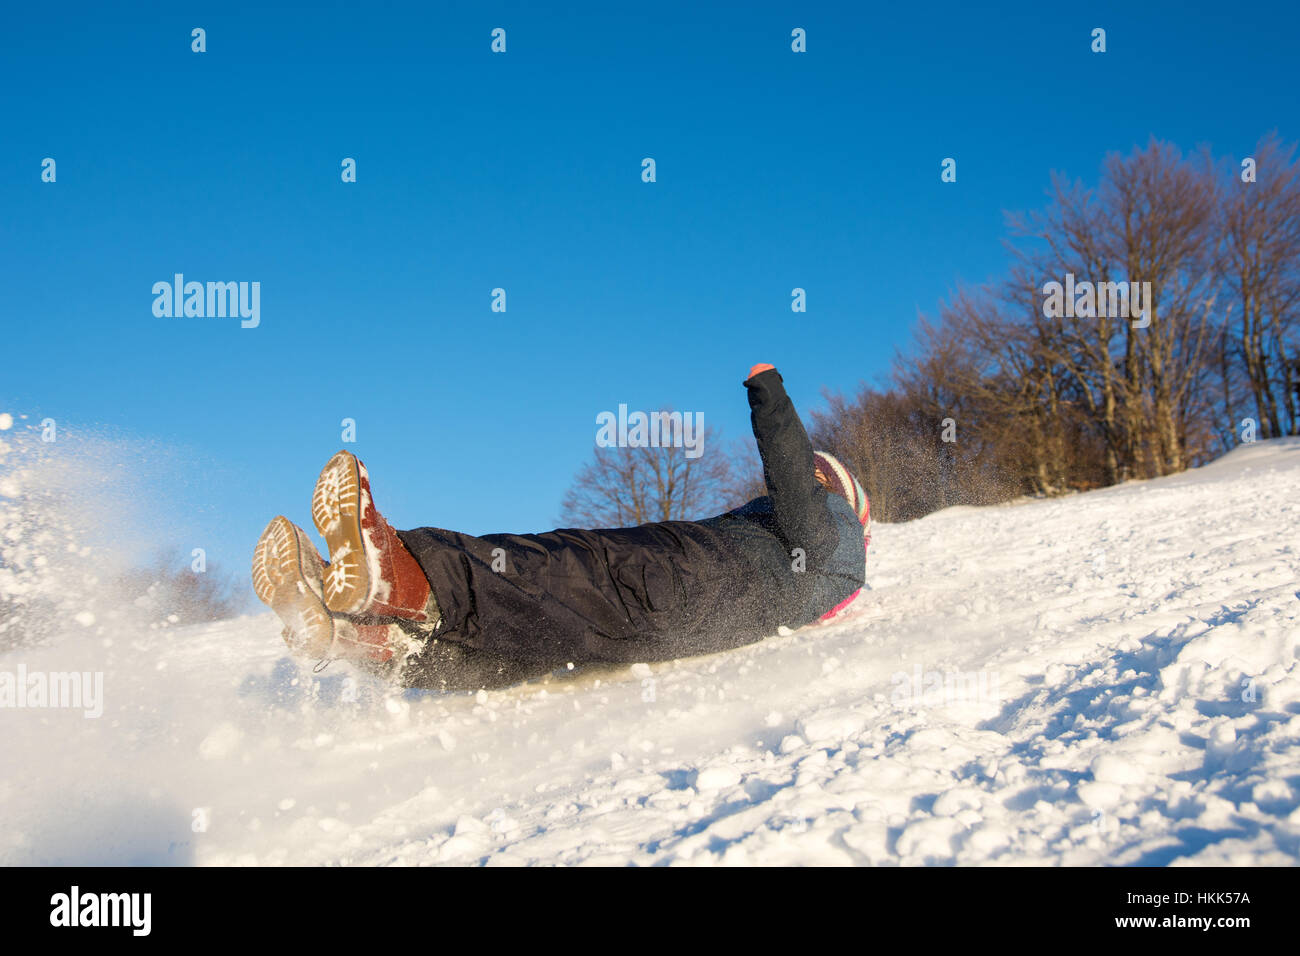 Girl falling down on the snowy mountain Stock Photo